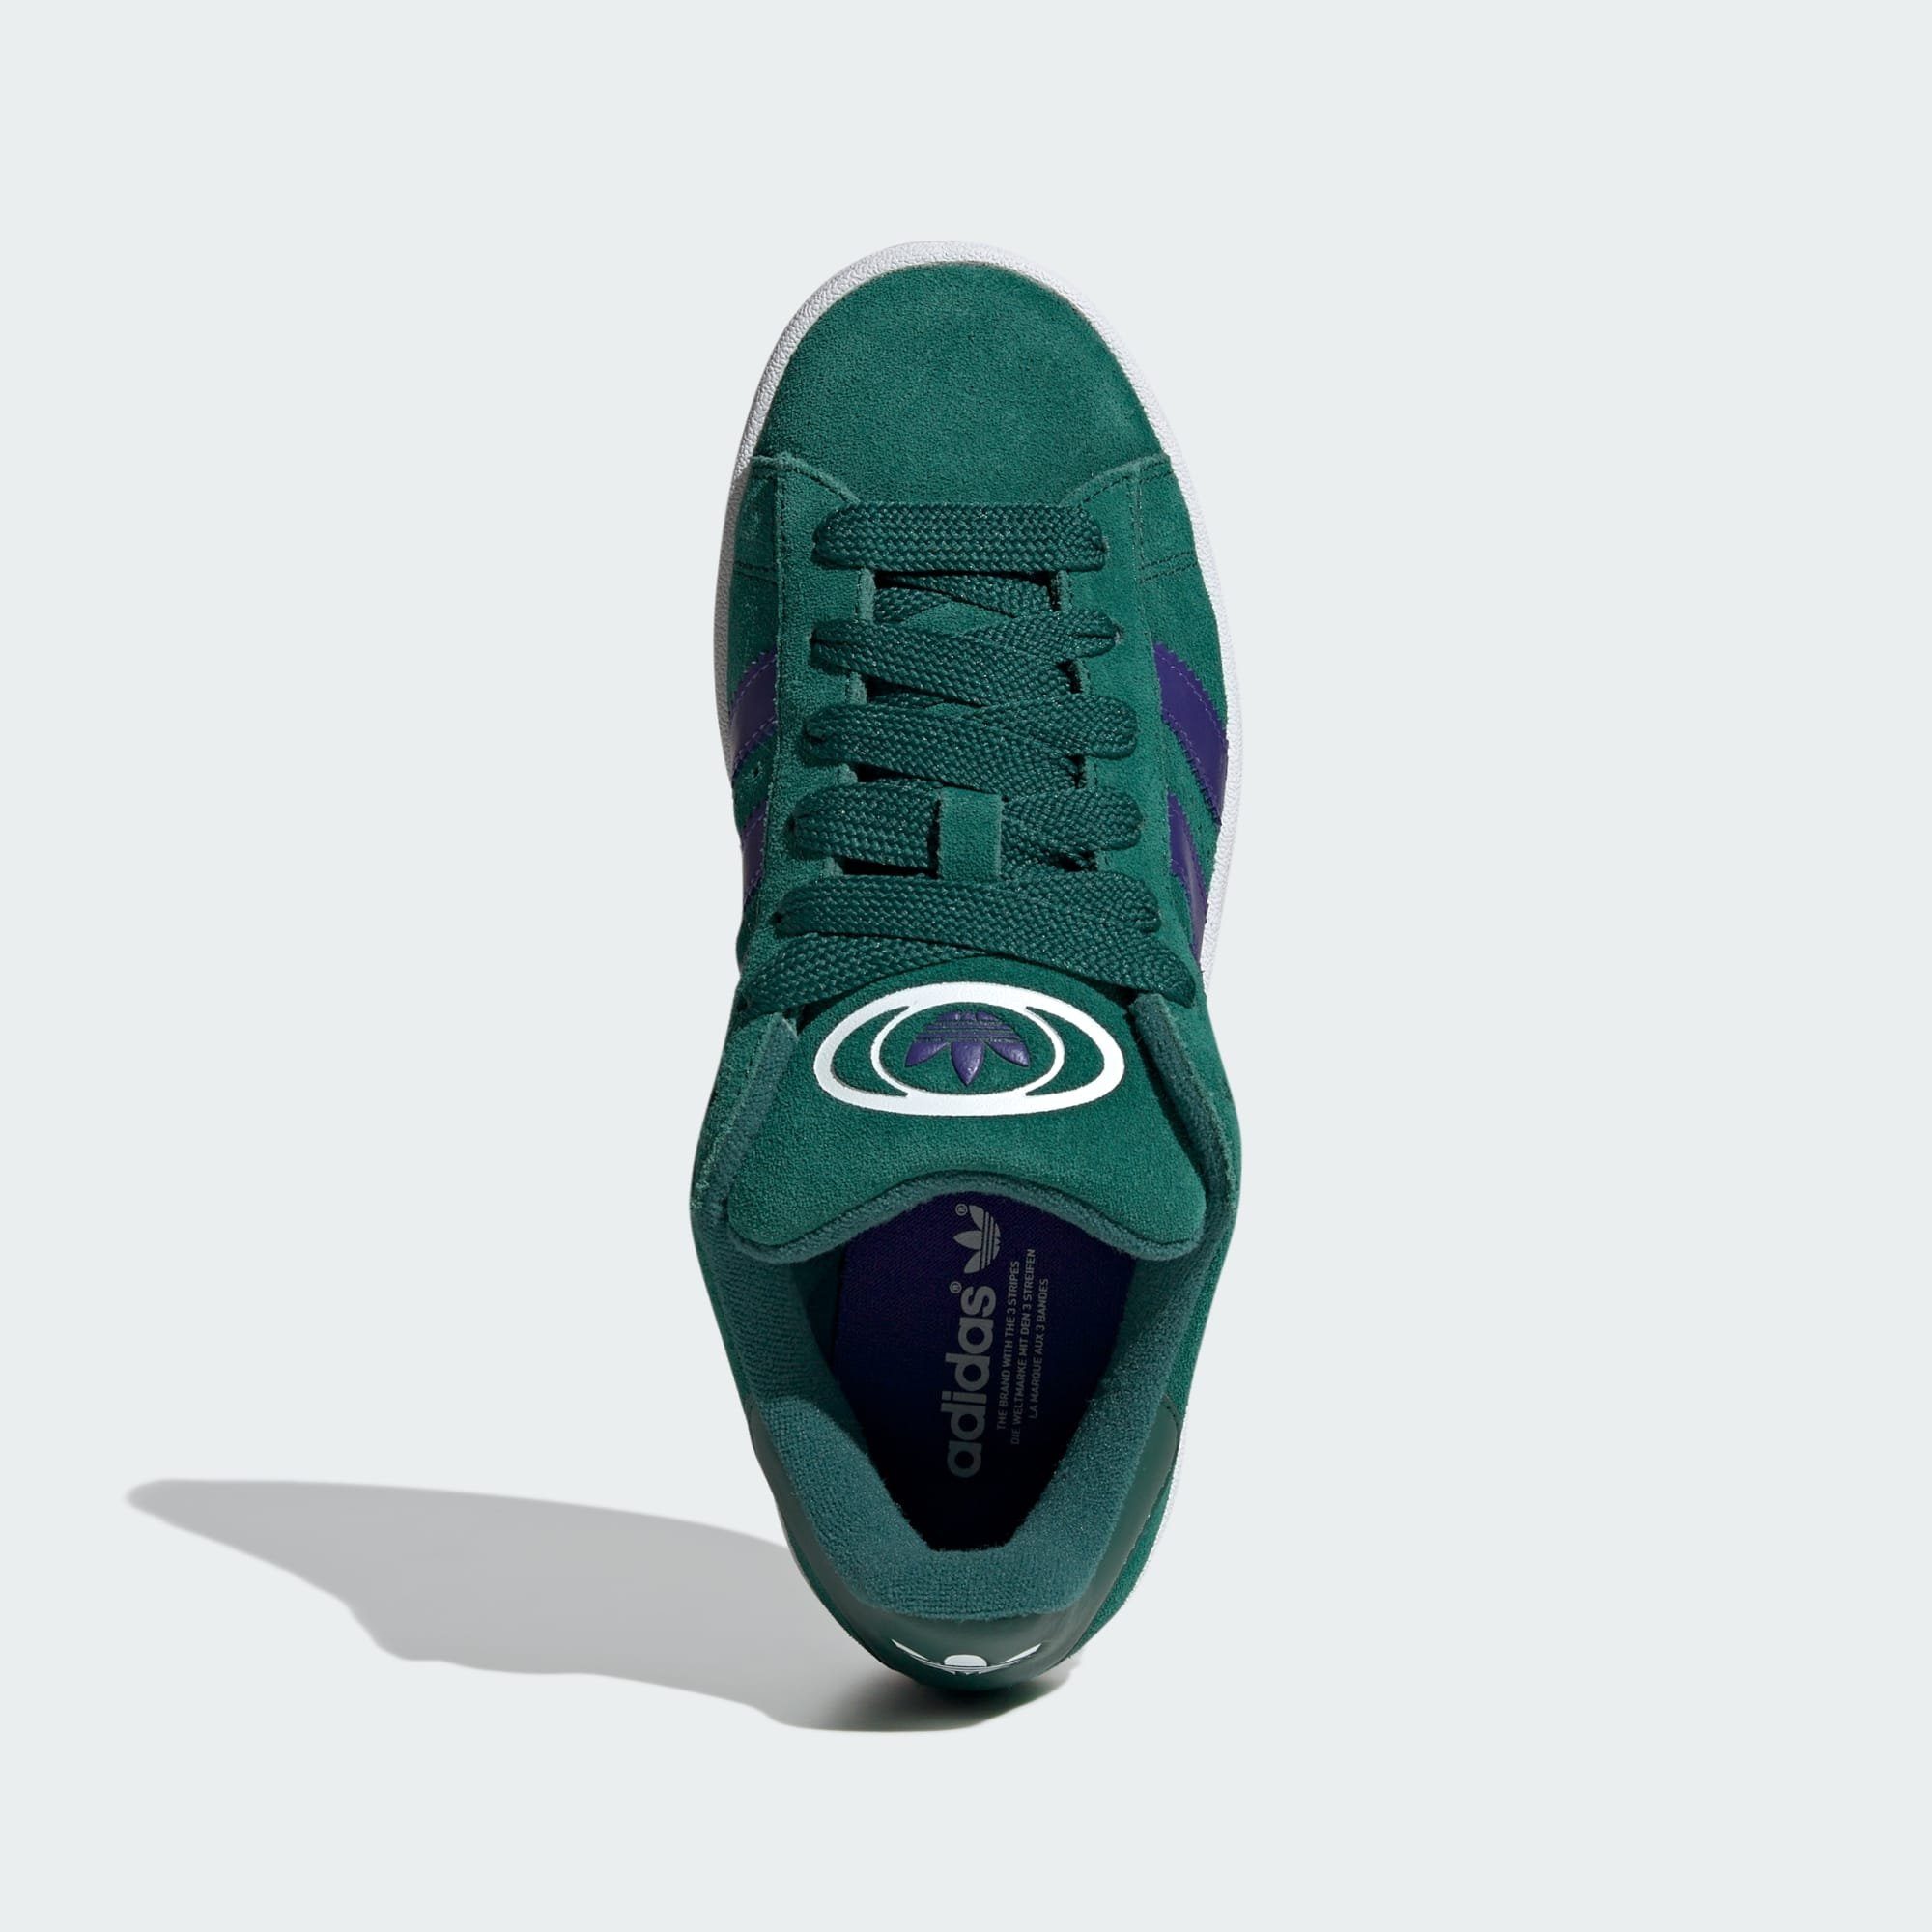 Energy Originals Cloud White / Sneaker Green adidas Collegiate / CAMPUS Ink SCHUH 00S